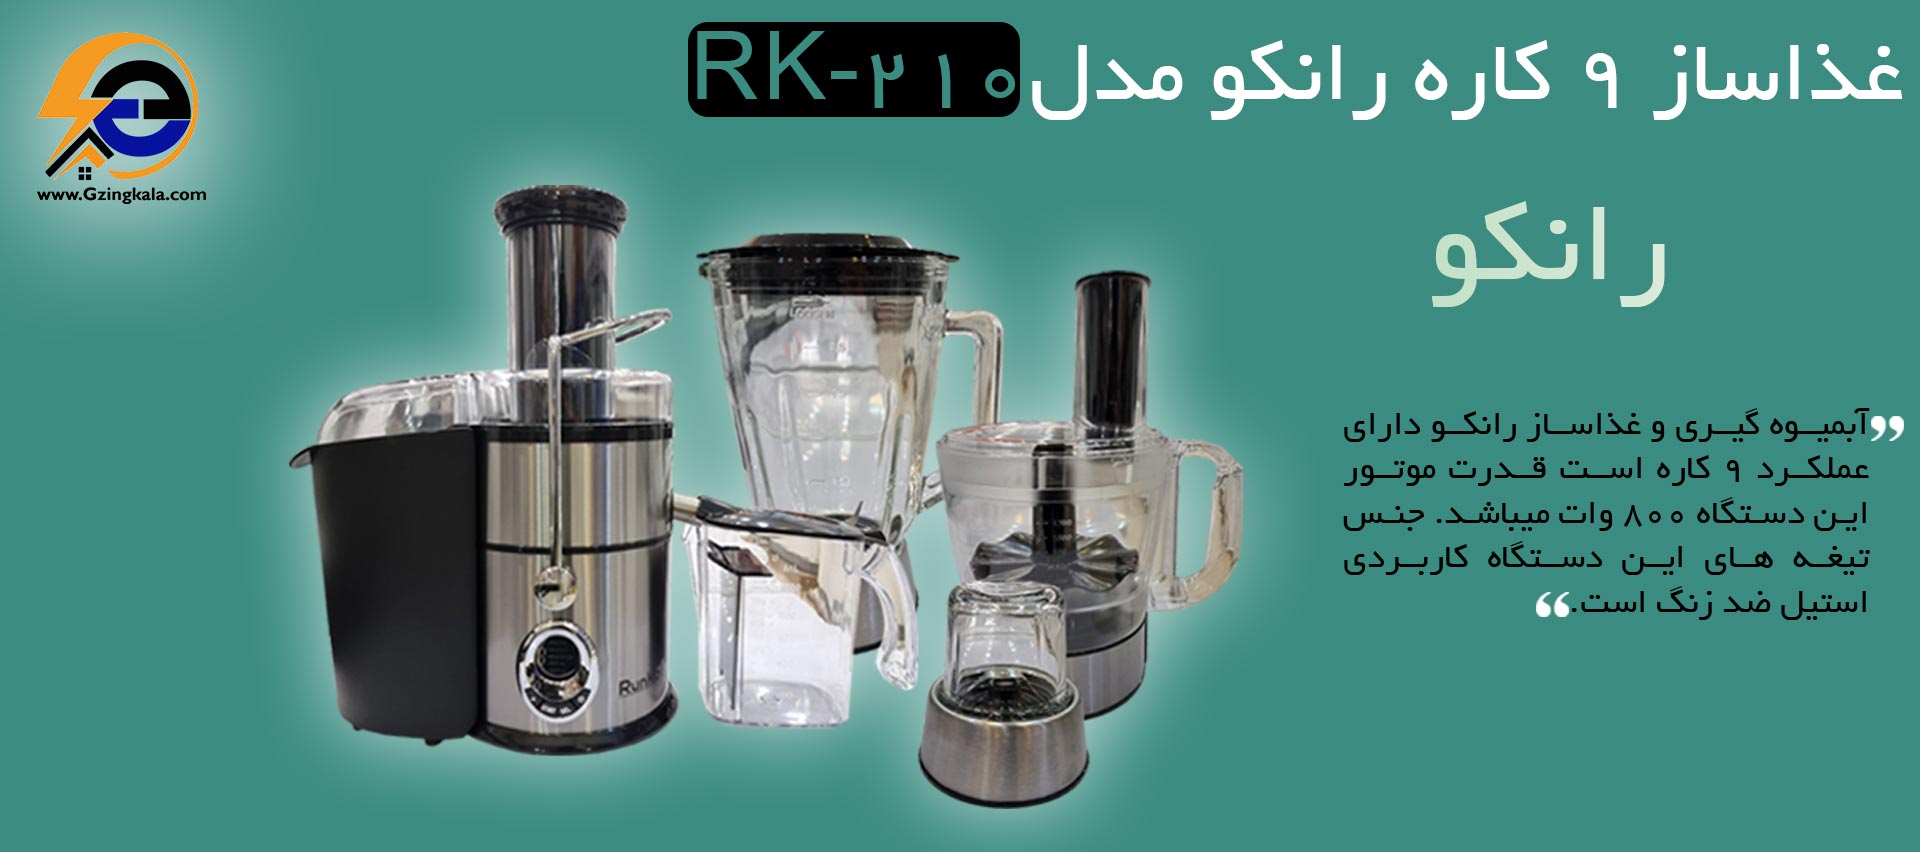 غذاساز 9 کاره رانکو مدل RK-210